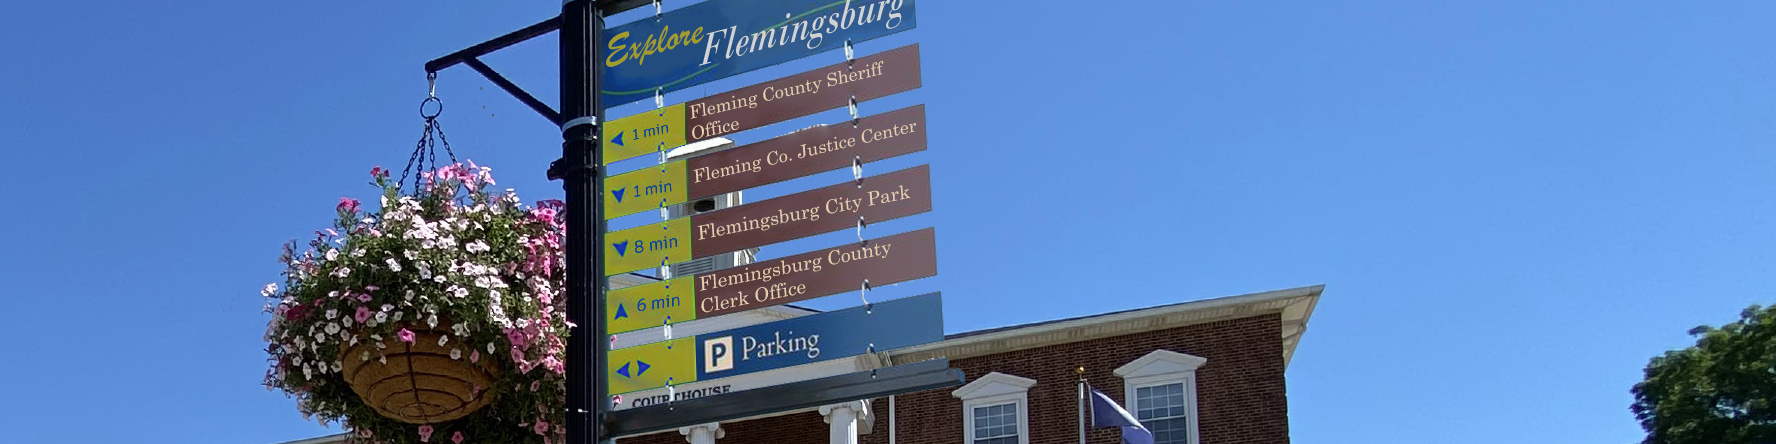 Flemingsburg Wayfinding photo banner